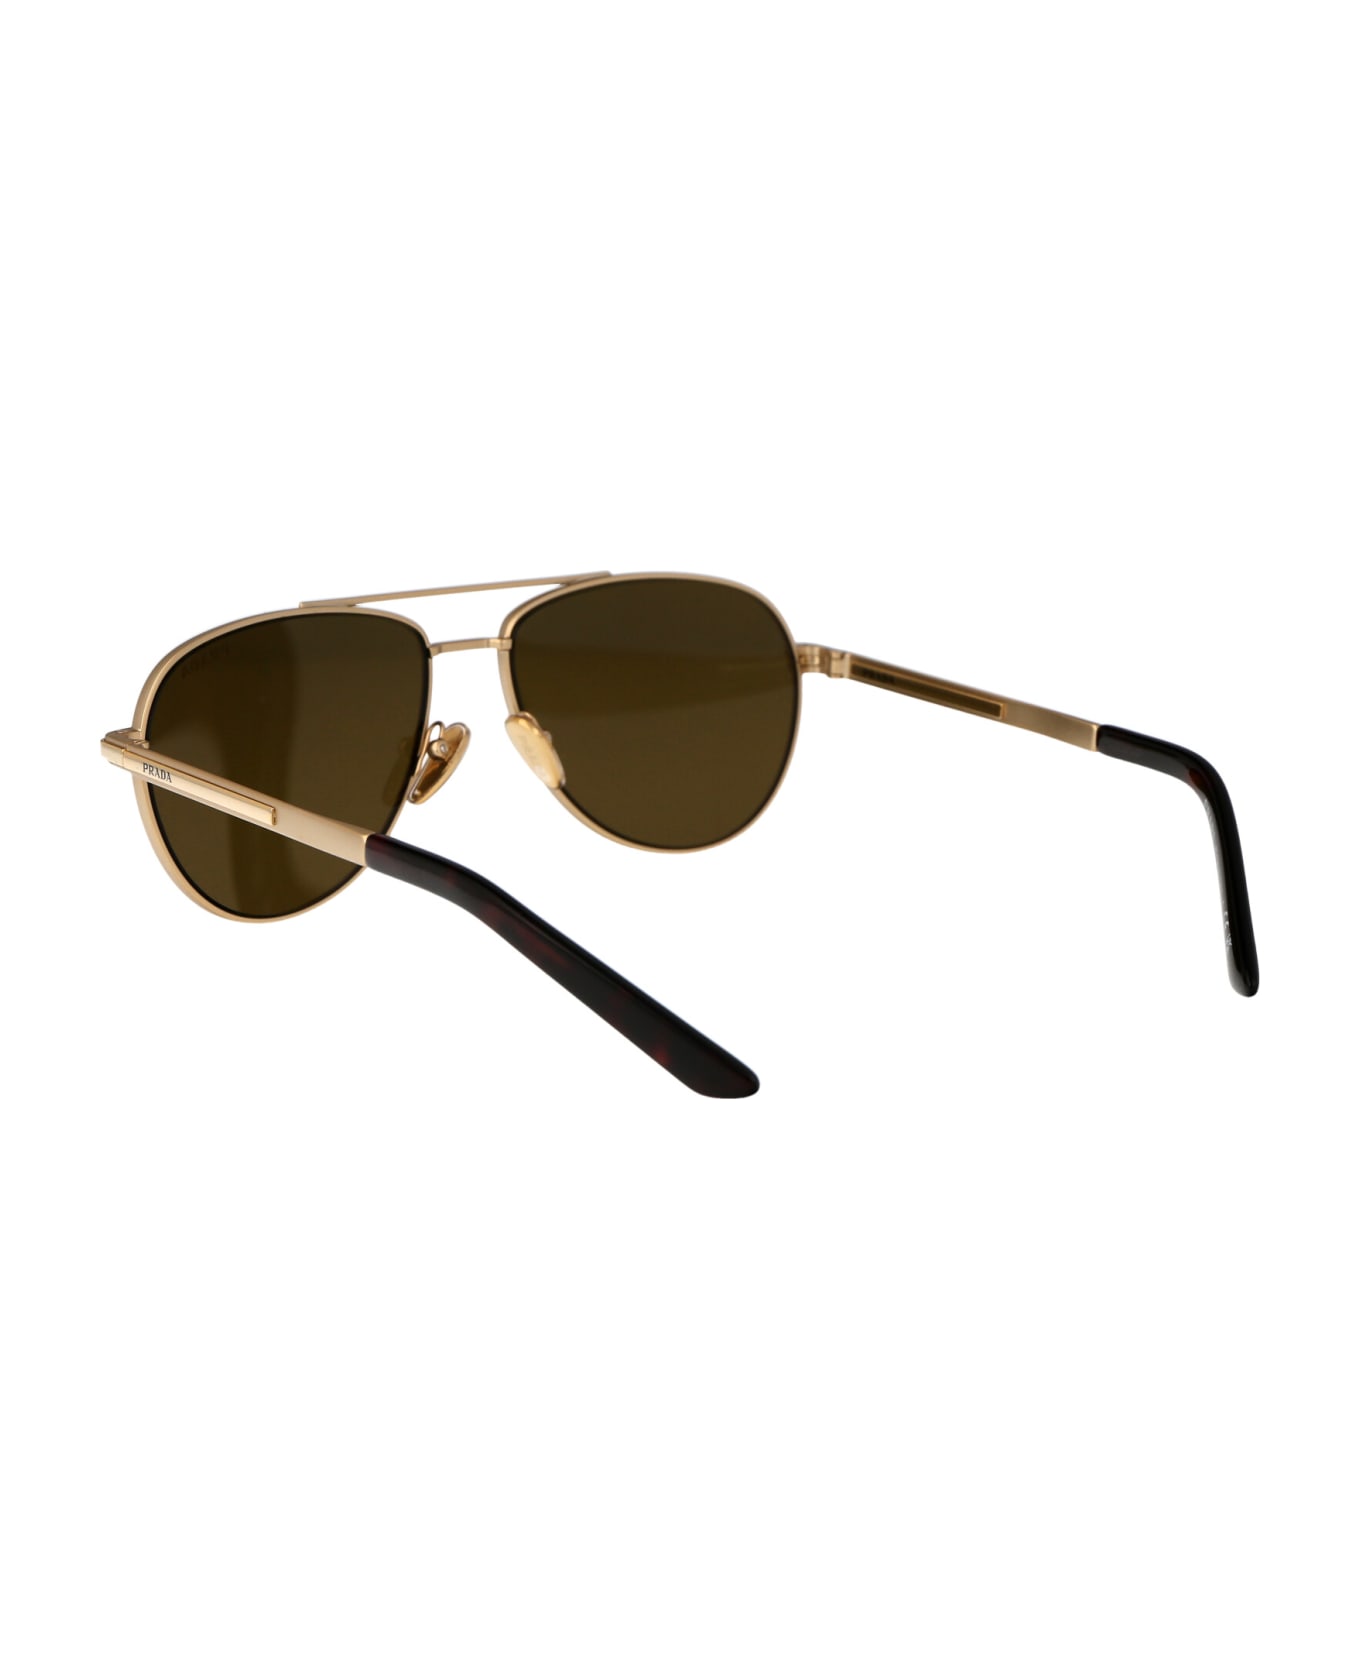 Prada Eyewear 0pr A54s Sunglasses - 1BK01T Matte Gold